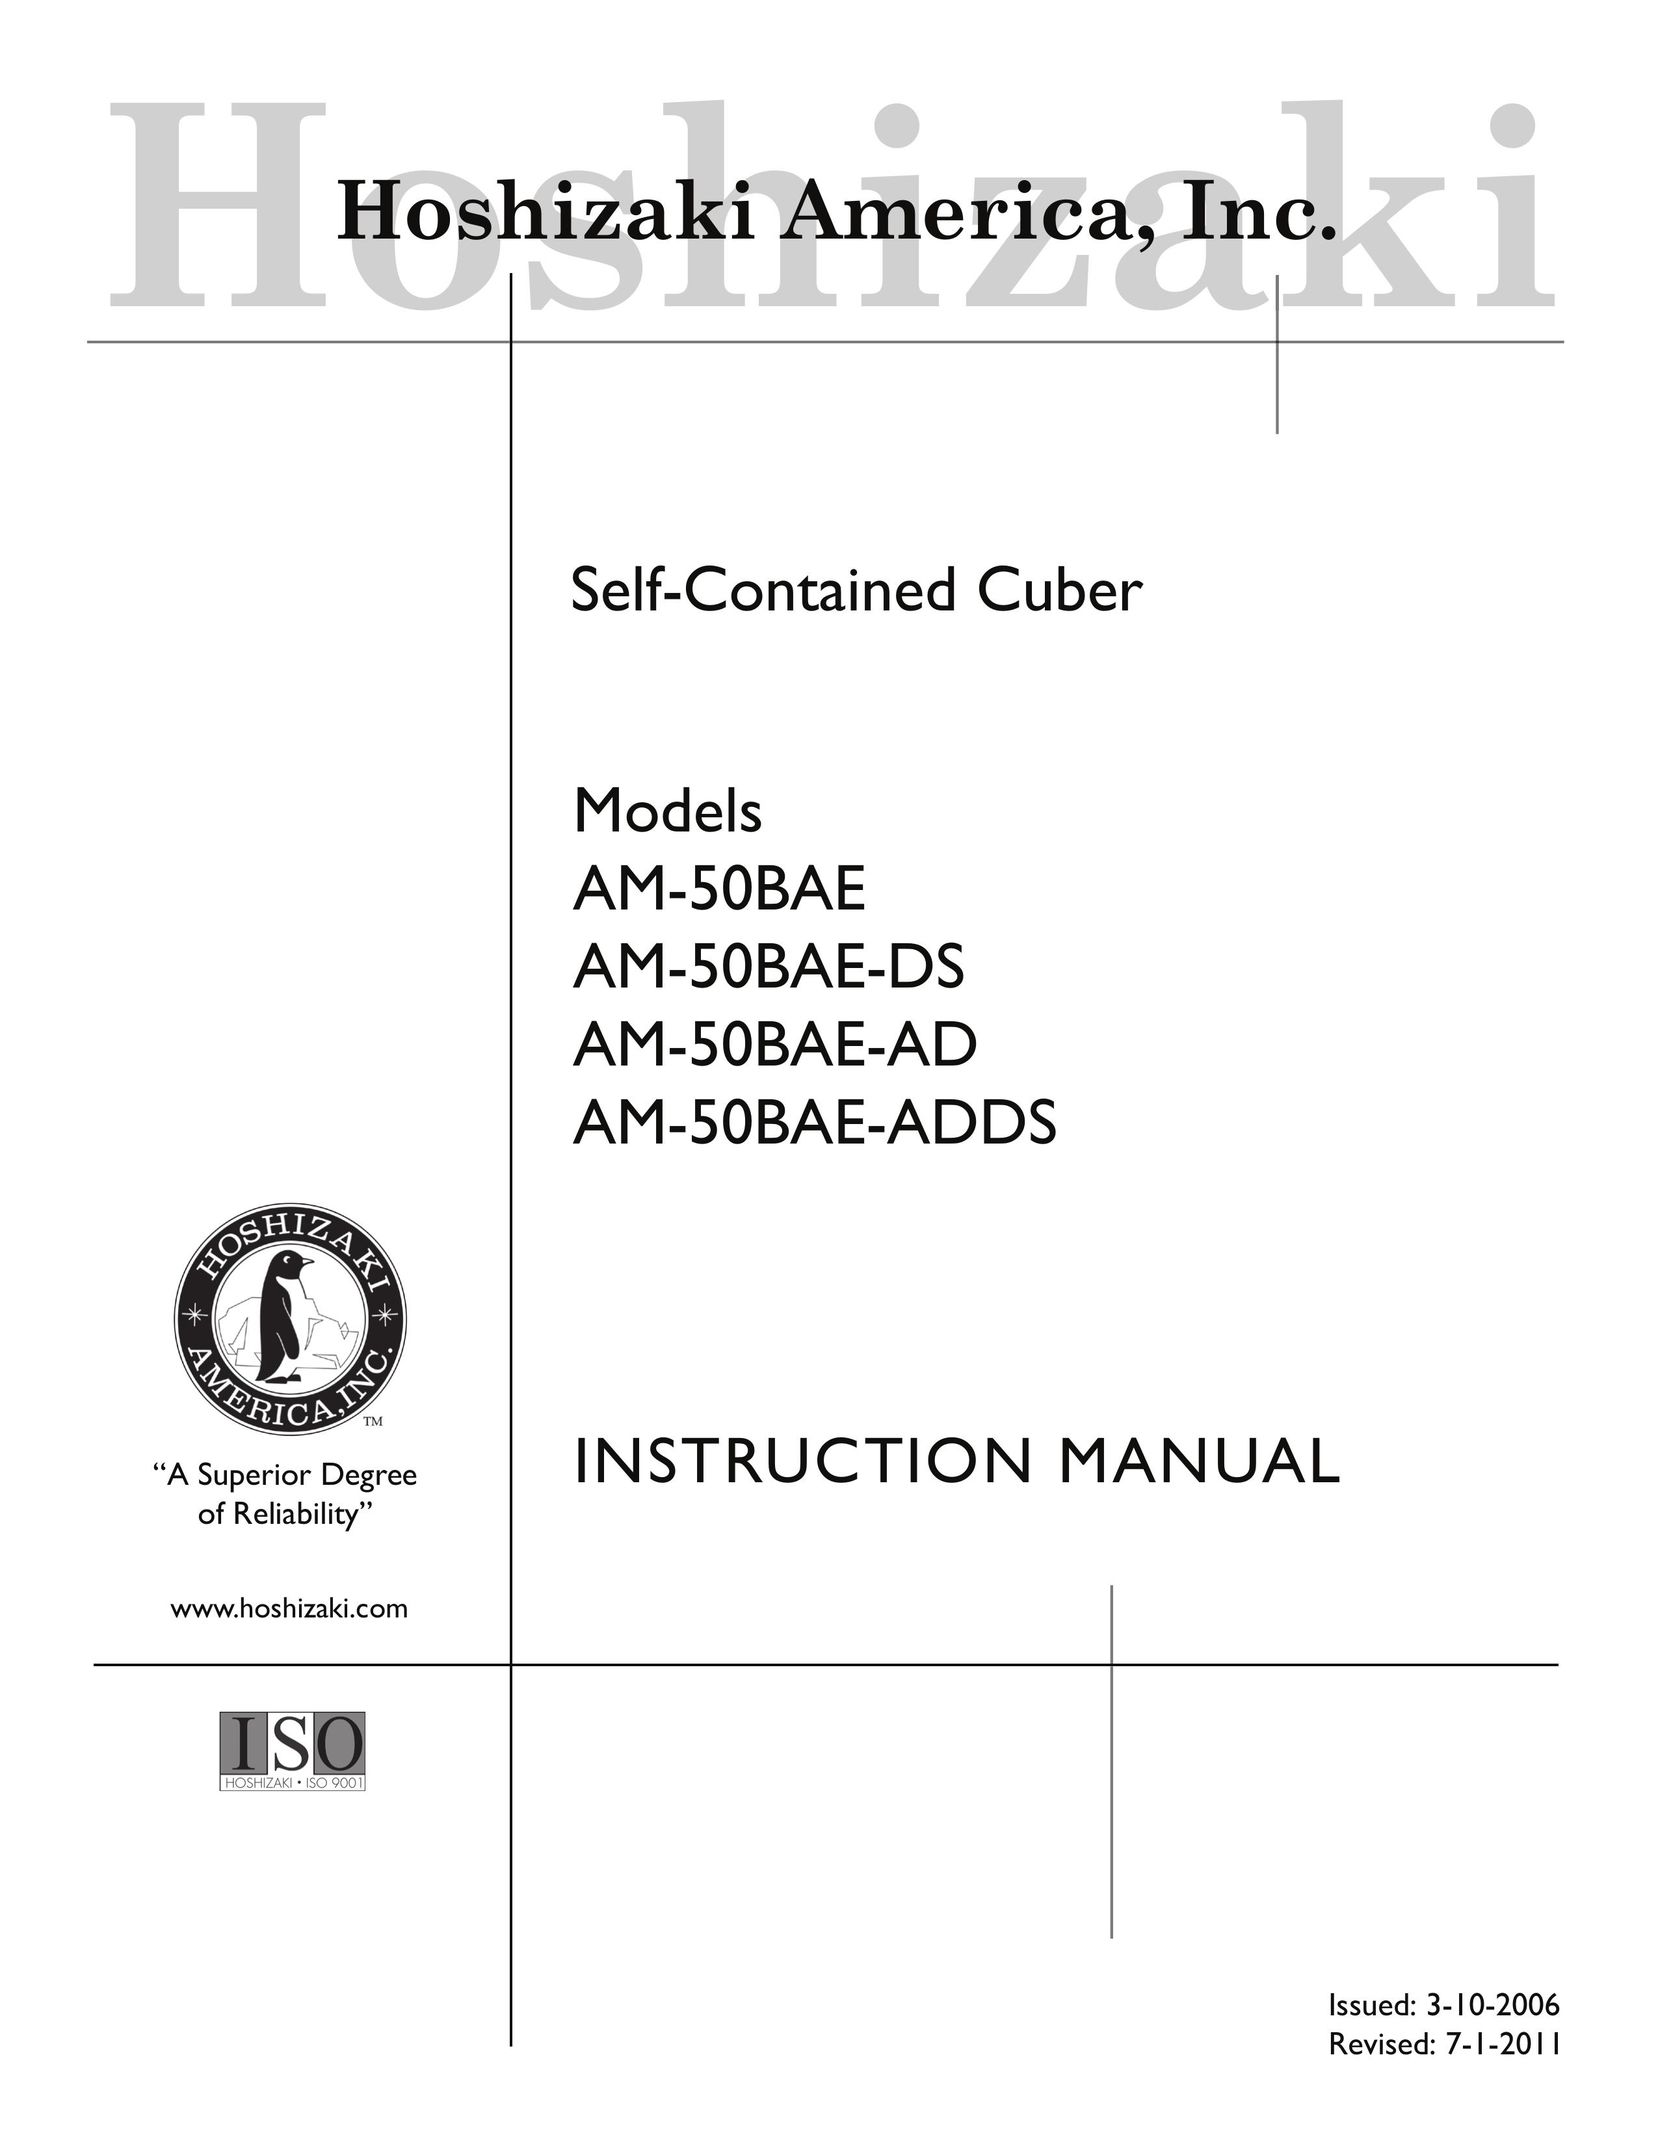 Hoshizaki AM-50BAE-DS Ice Maker User Manual